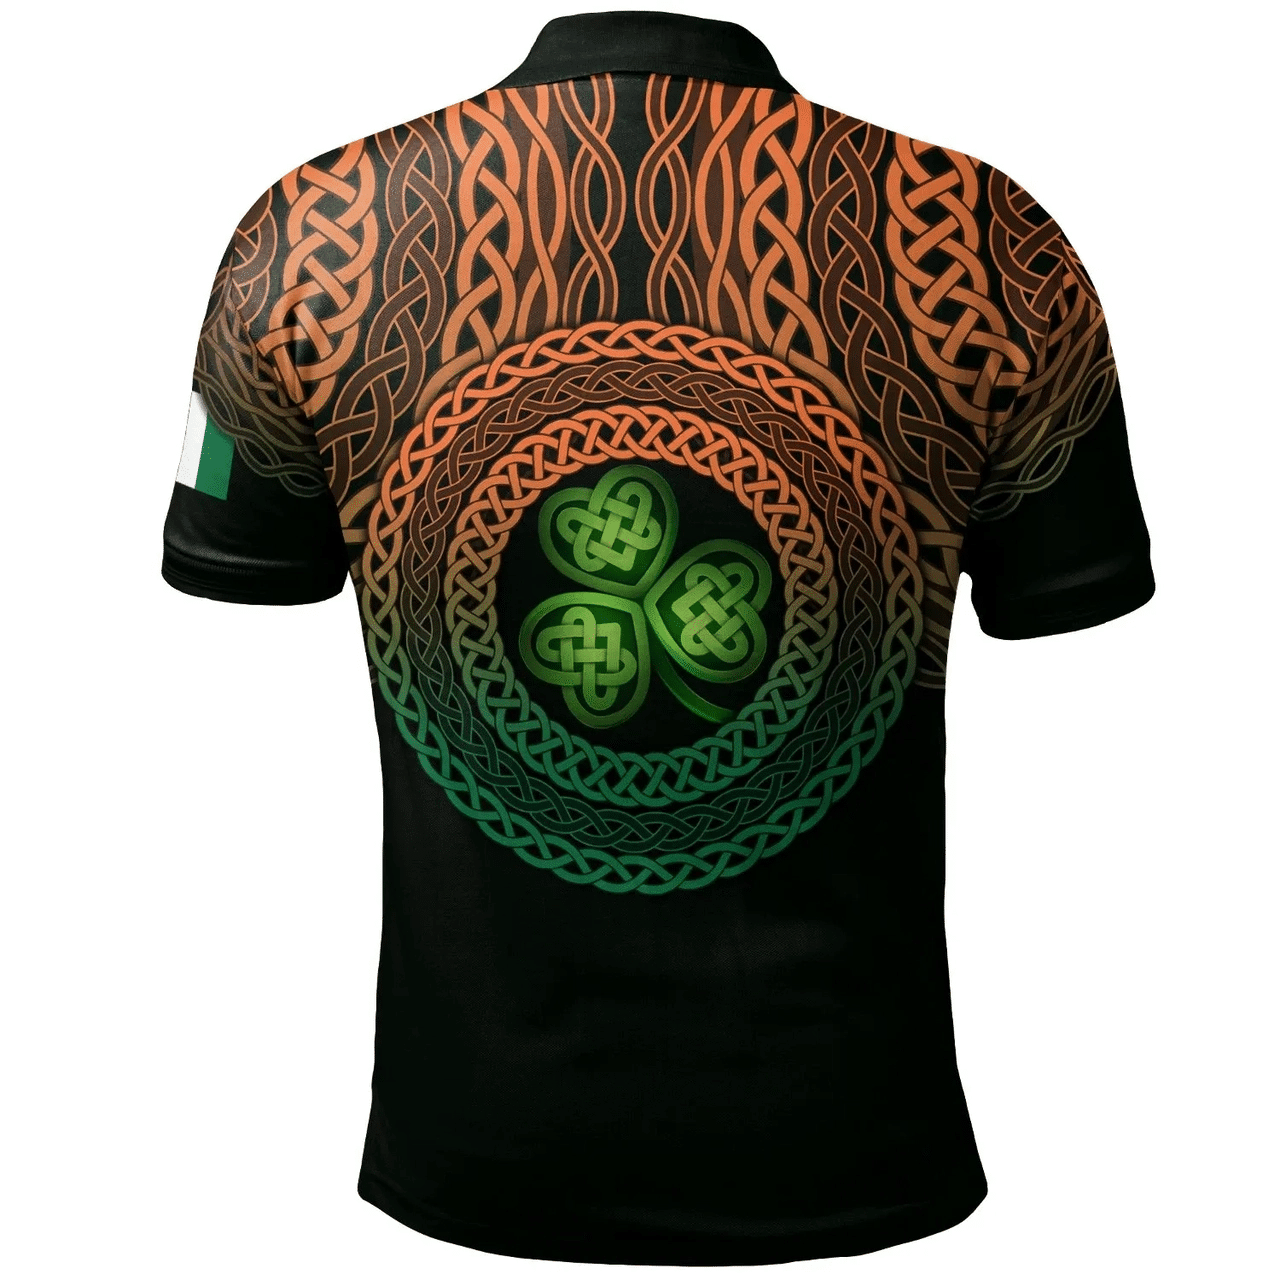 1stIreland Ireland Polo Shirt - Herlihy or O'Herlihy Irish Family Crest Polo Shirt - Celtic Pride A7 | 1stIreland.com